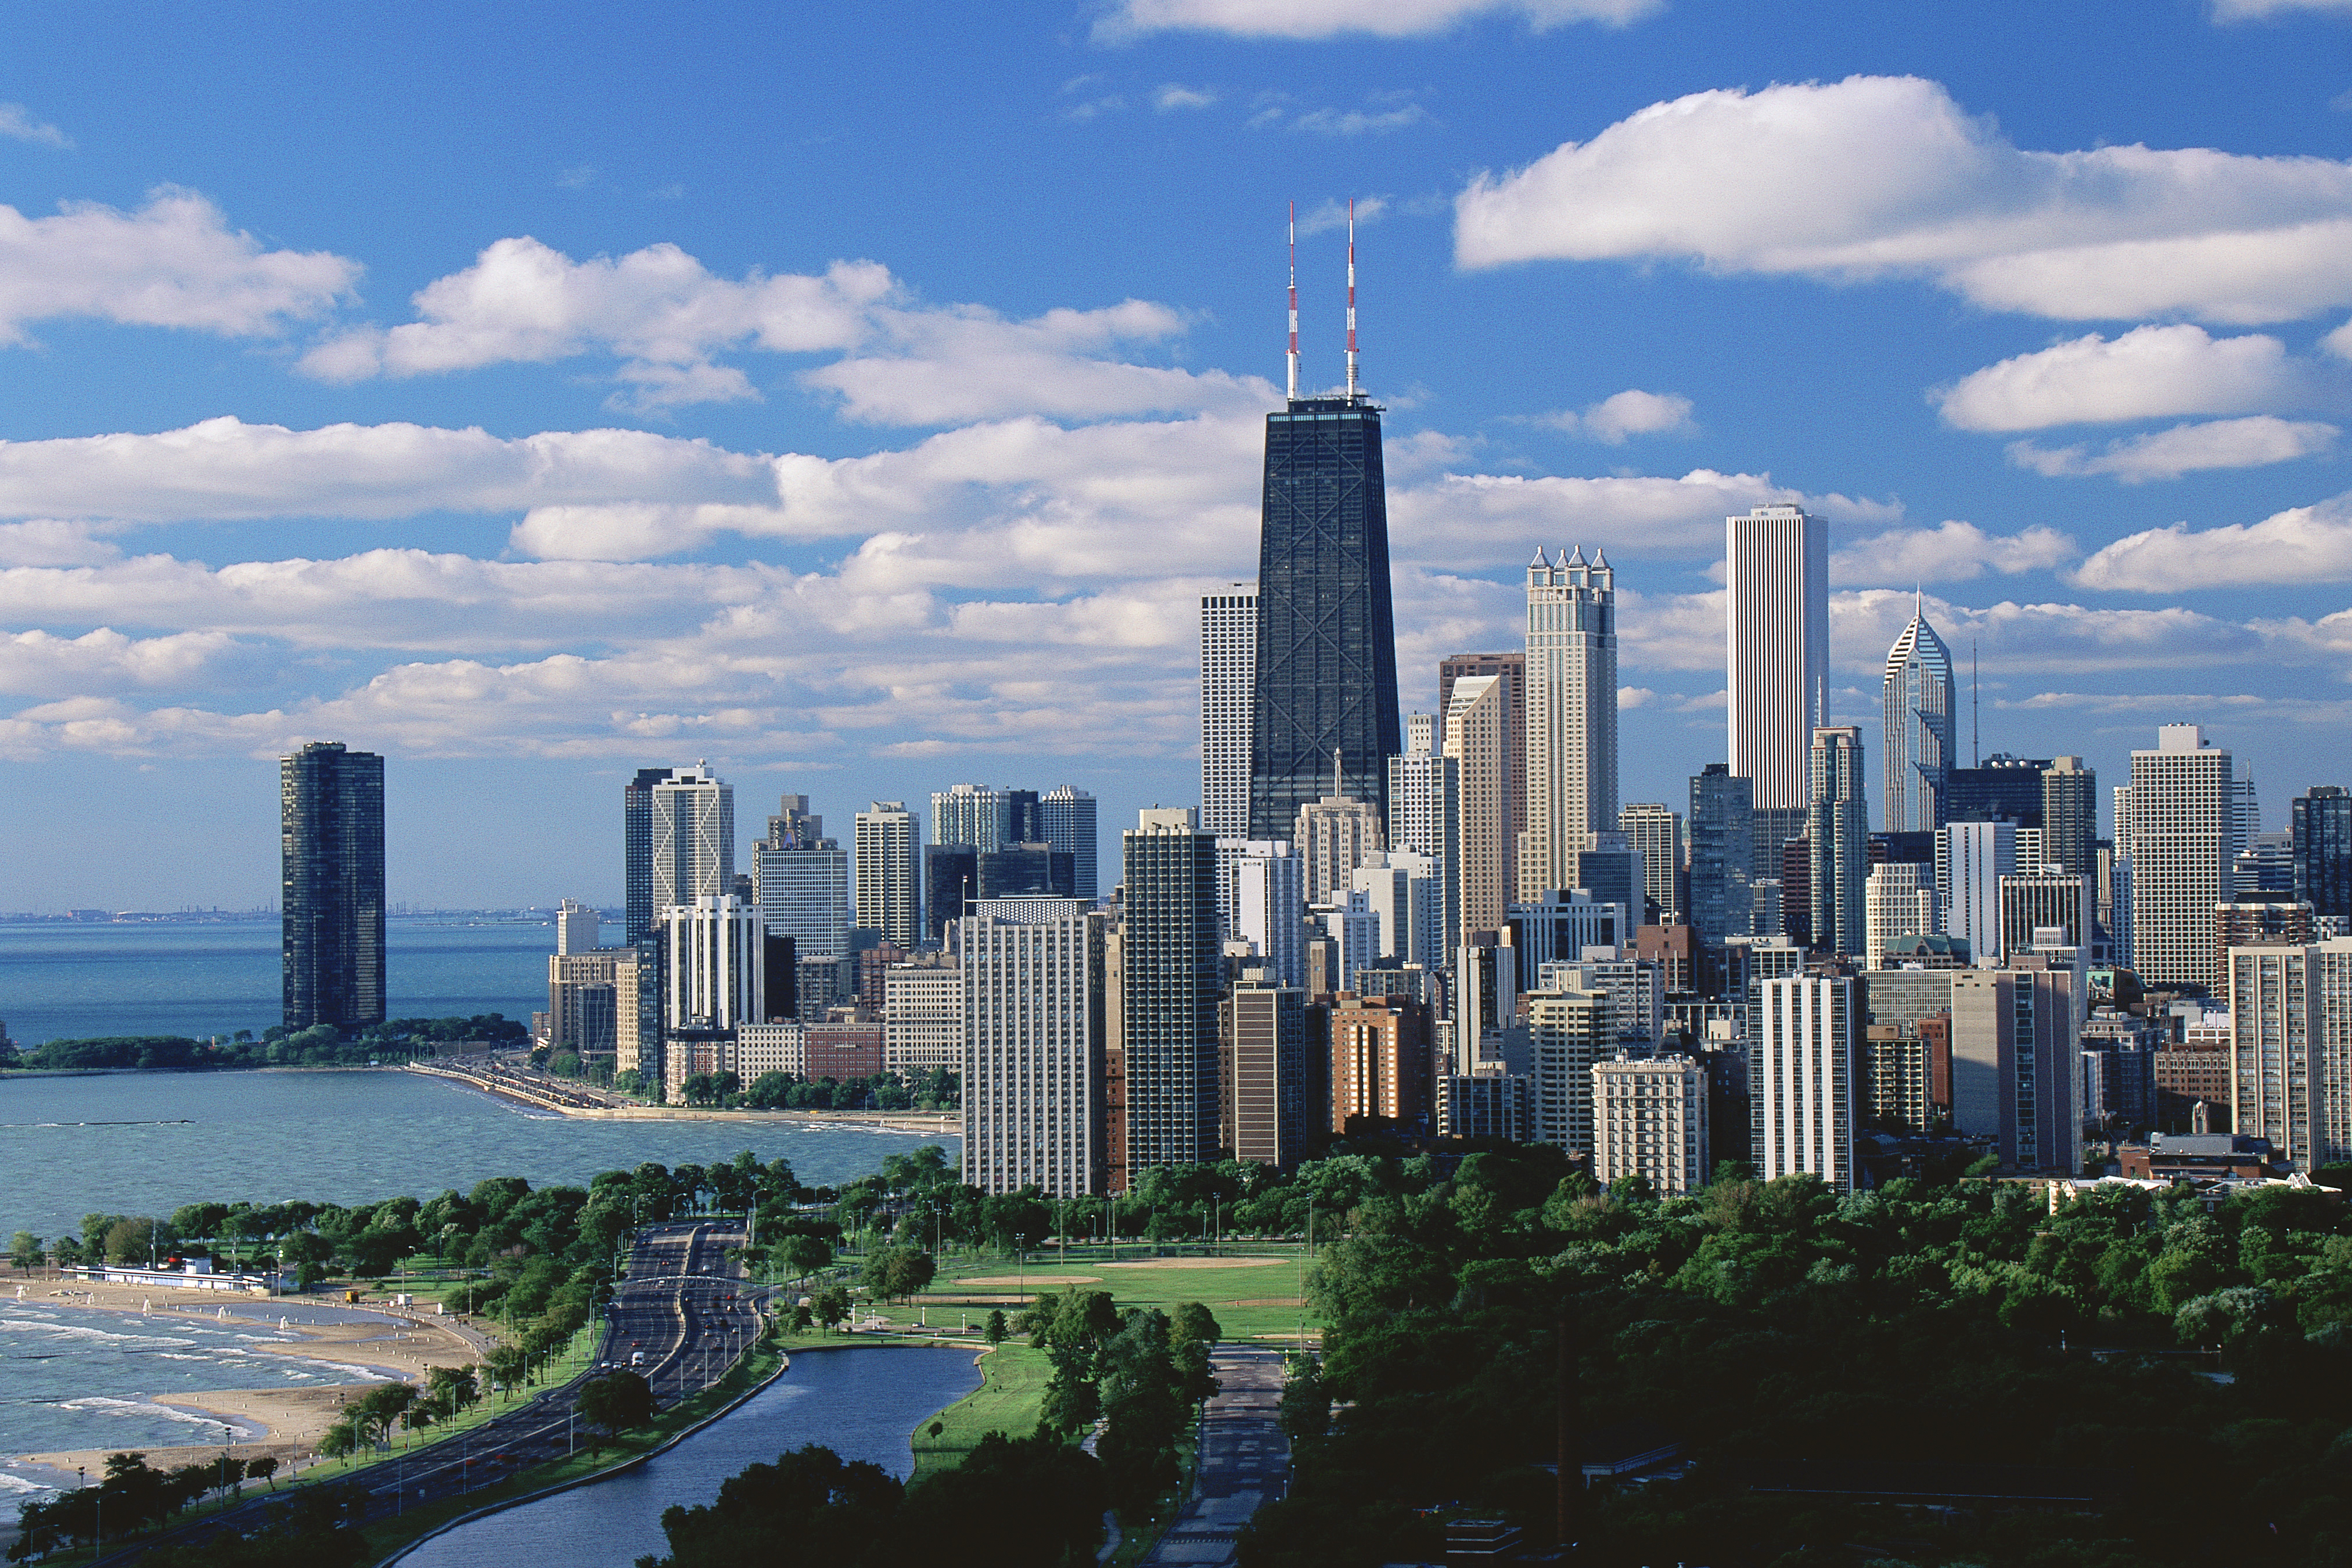 skyline of Chicago, IL